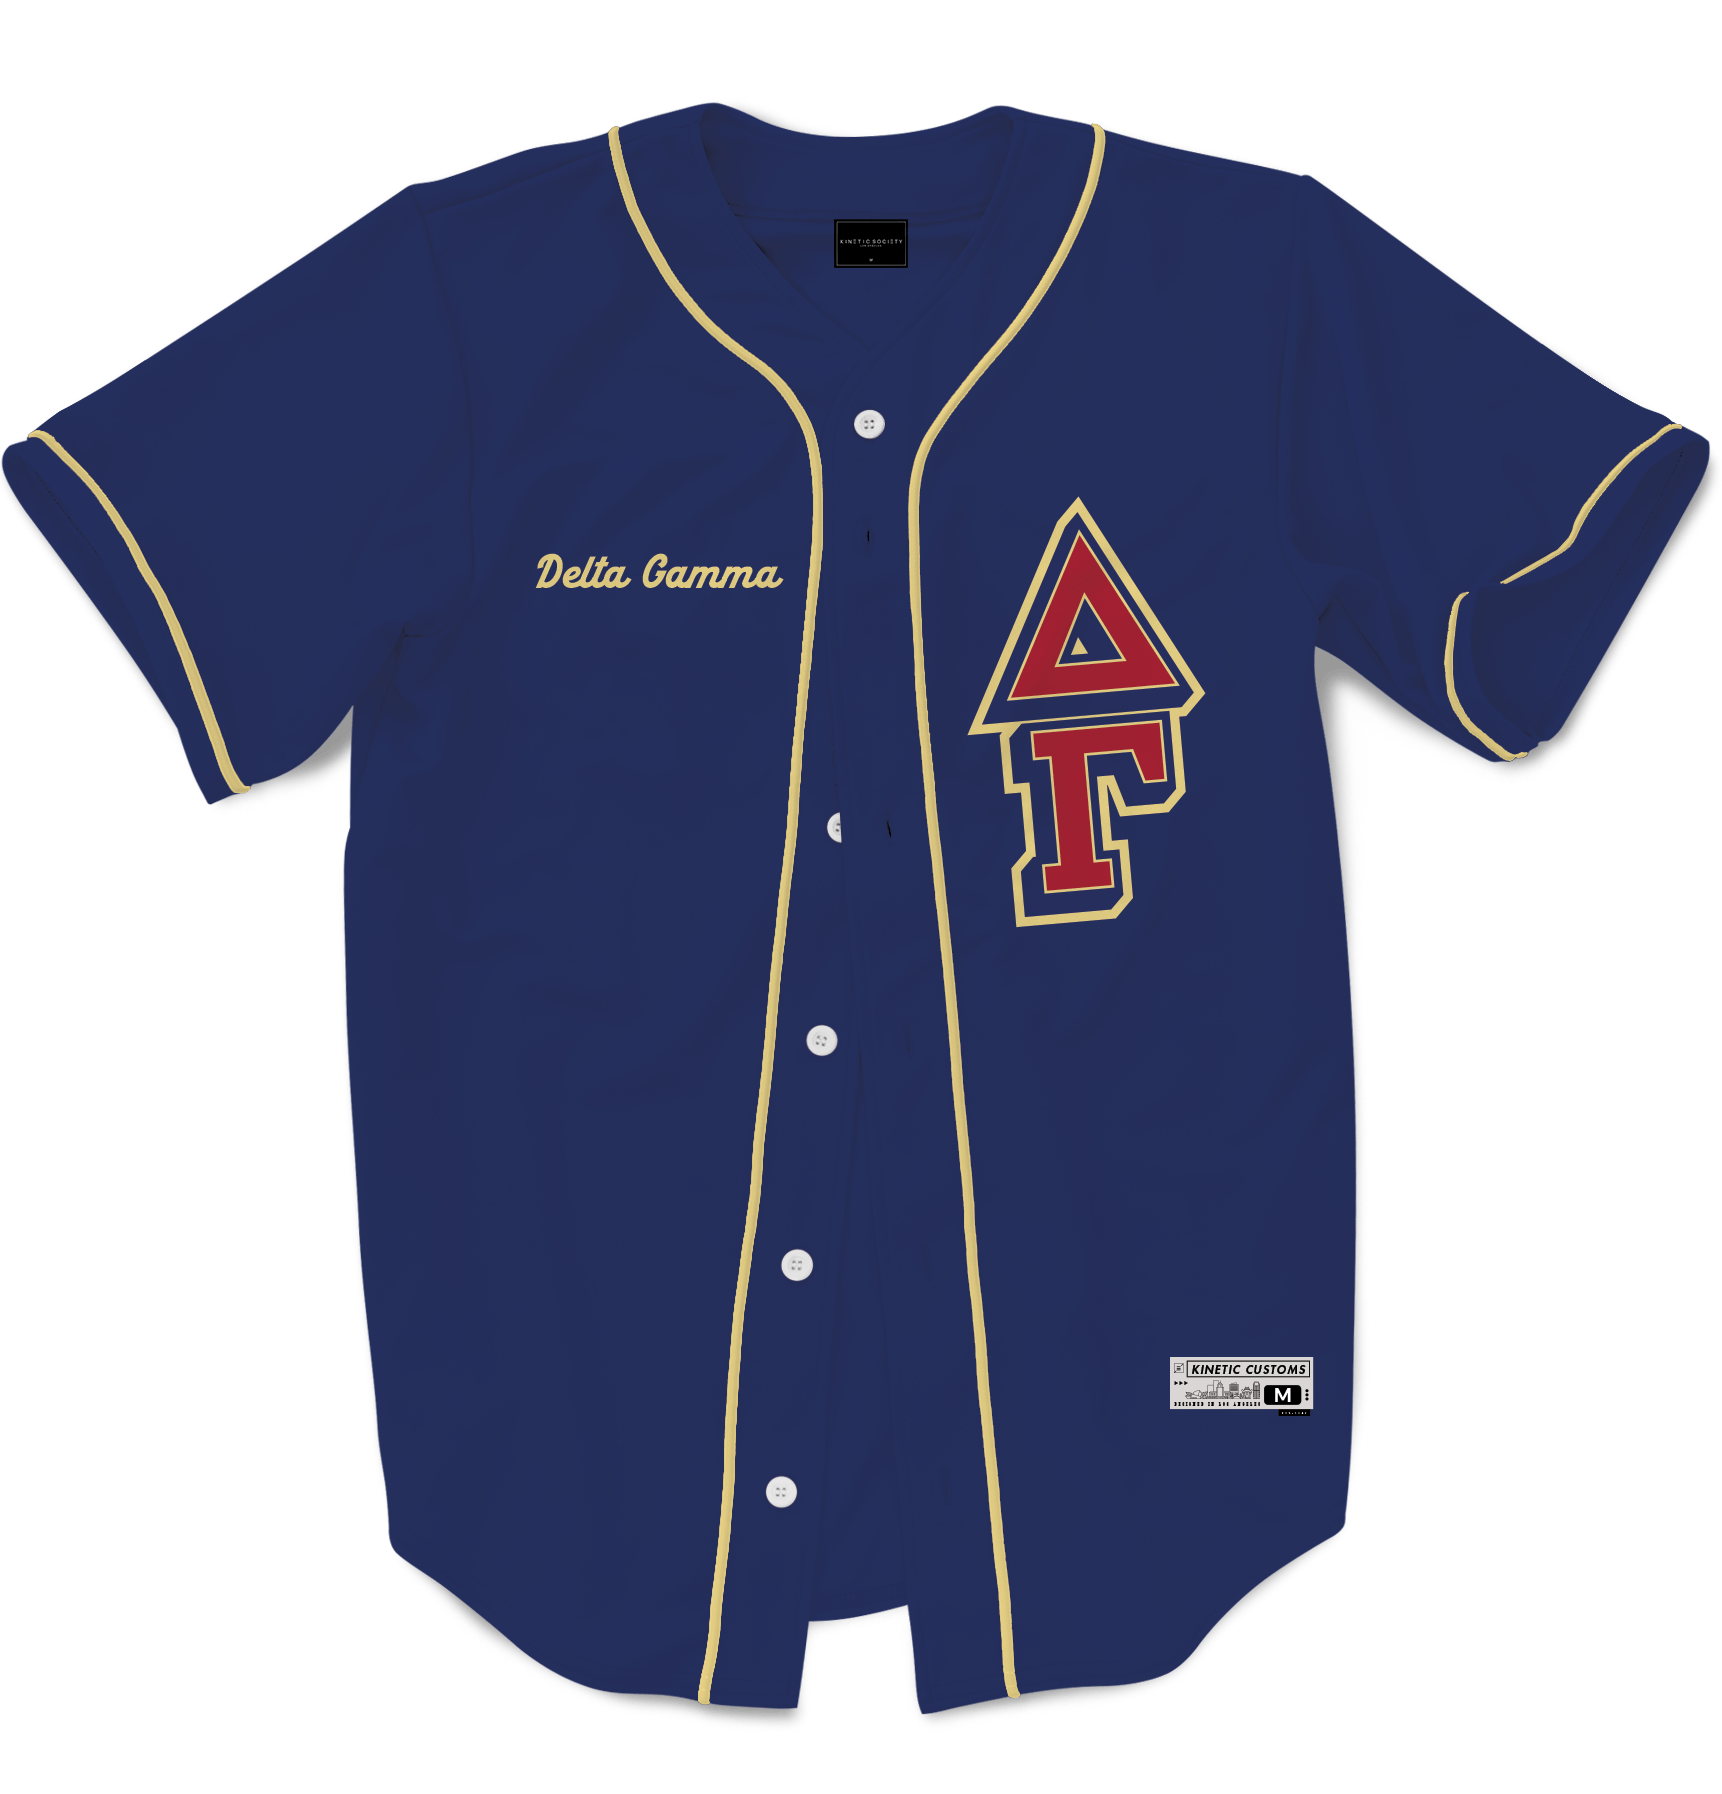 DELTA GAMMA - The Block Baseball Jersey Premium Baseball Kinetic Society LLC 